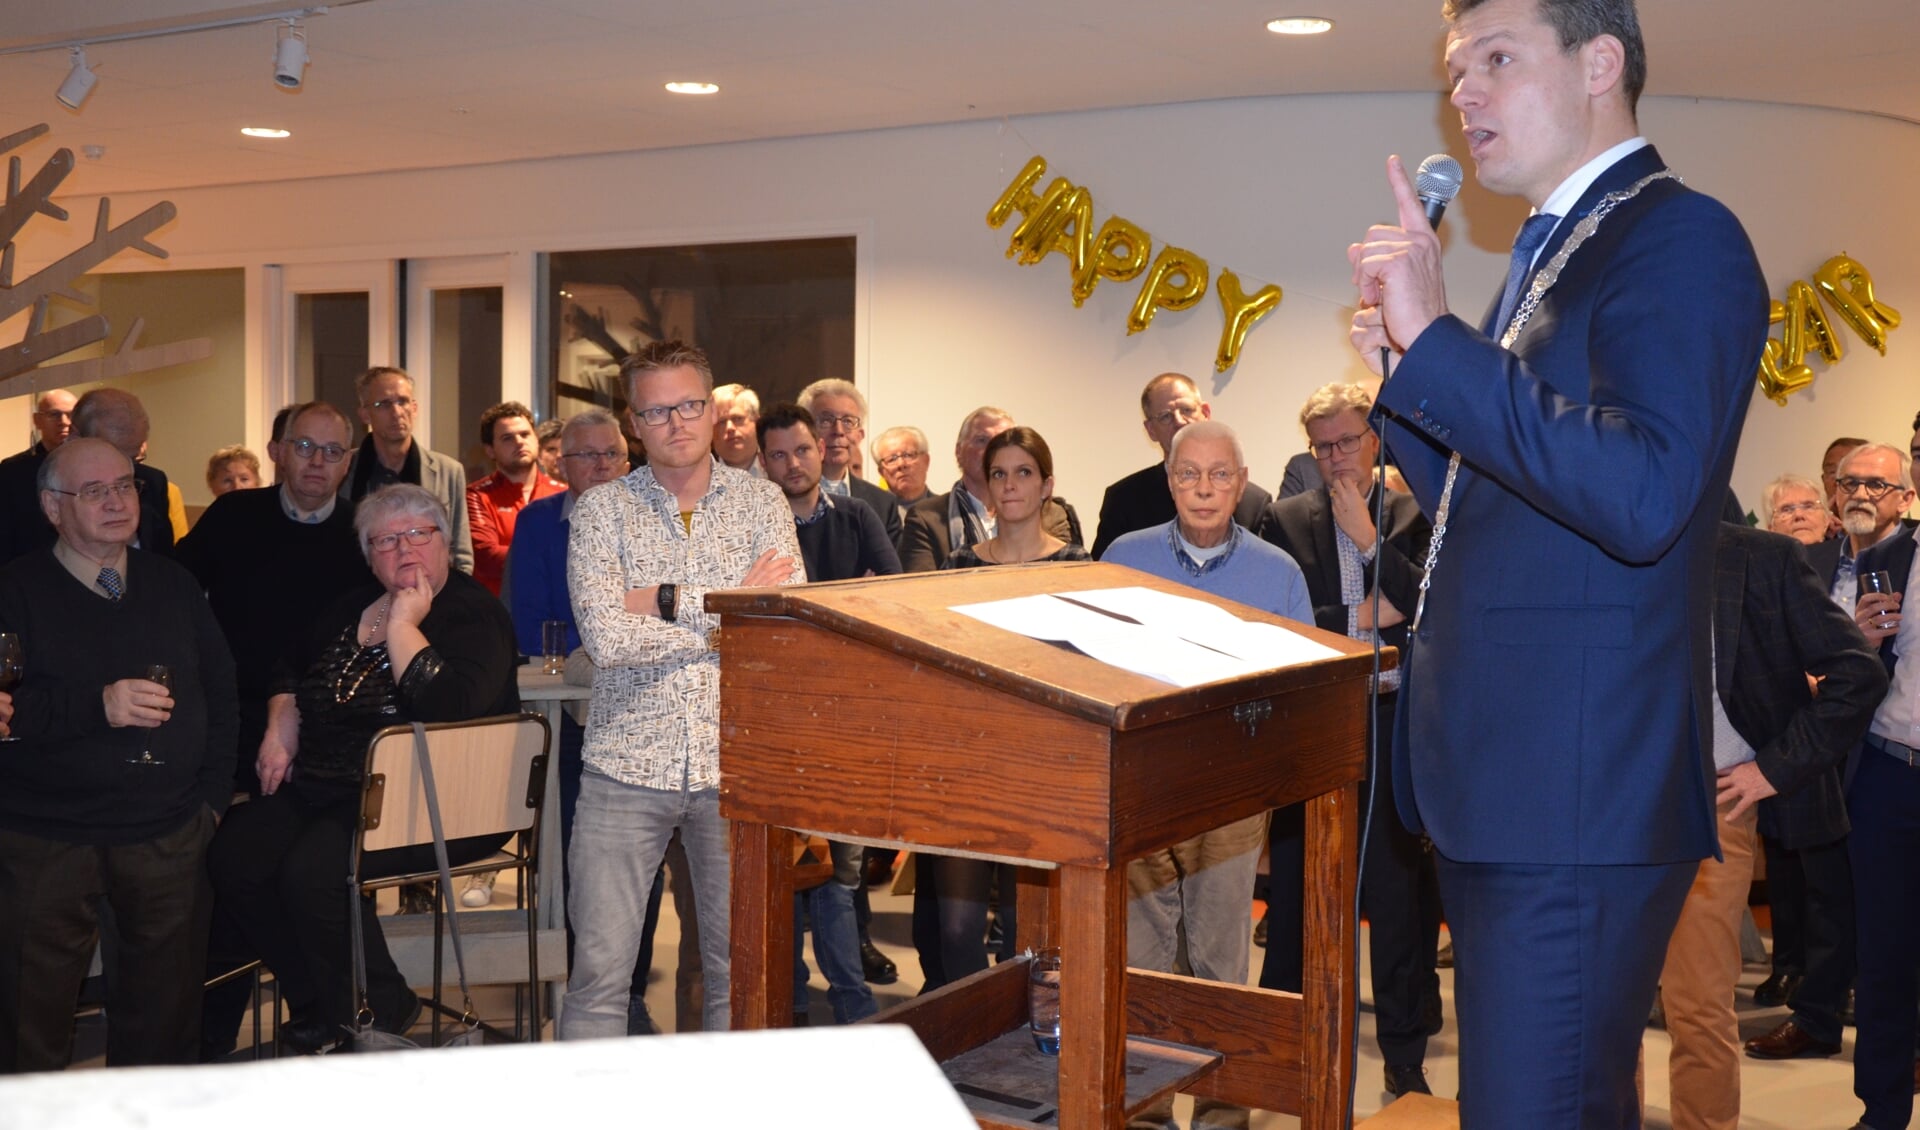 Burgemeester Nieuwenhuis wil een vuurwerkverbod, ook in Waddinxveen. (foto en tekst: Nicole Lamers)